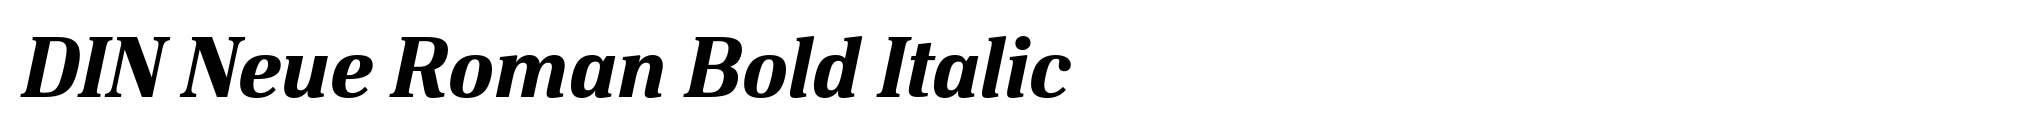 DIN Neue Roman Bold Italic image